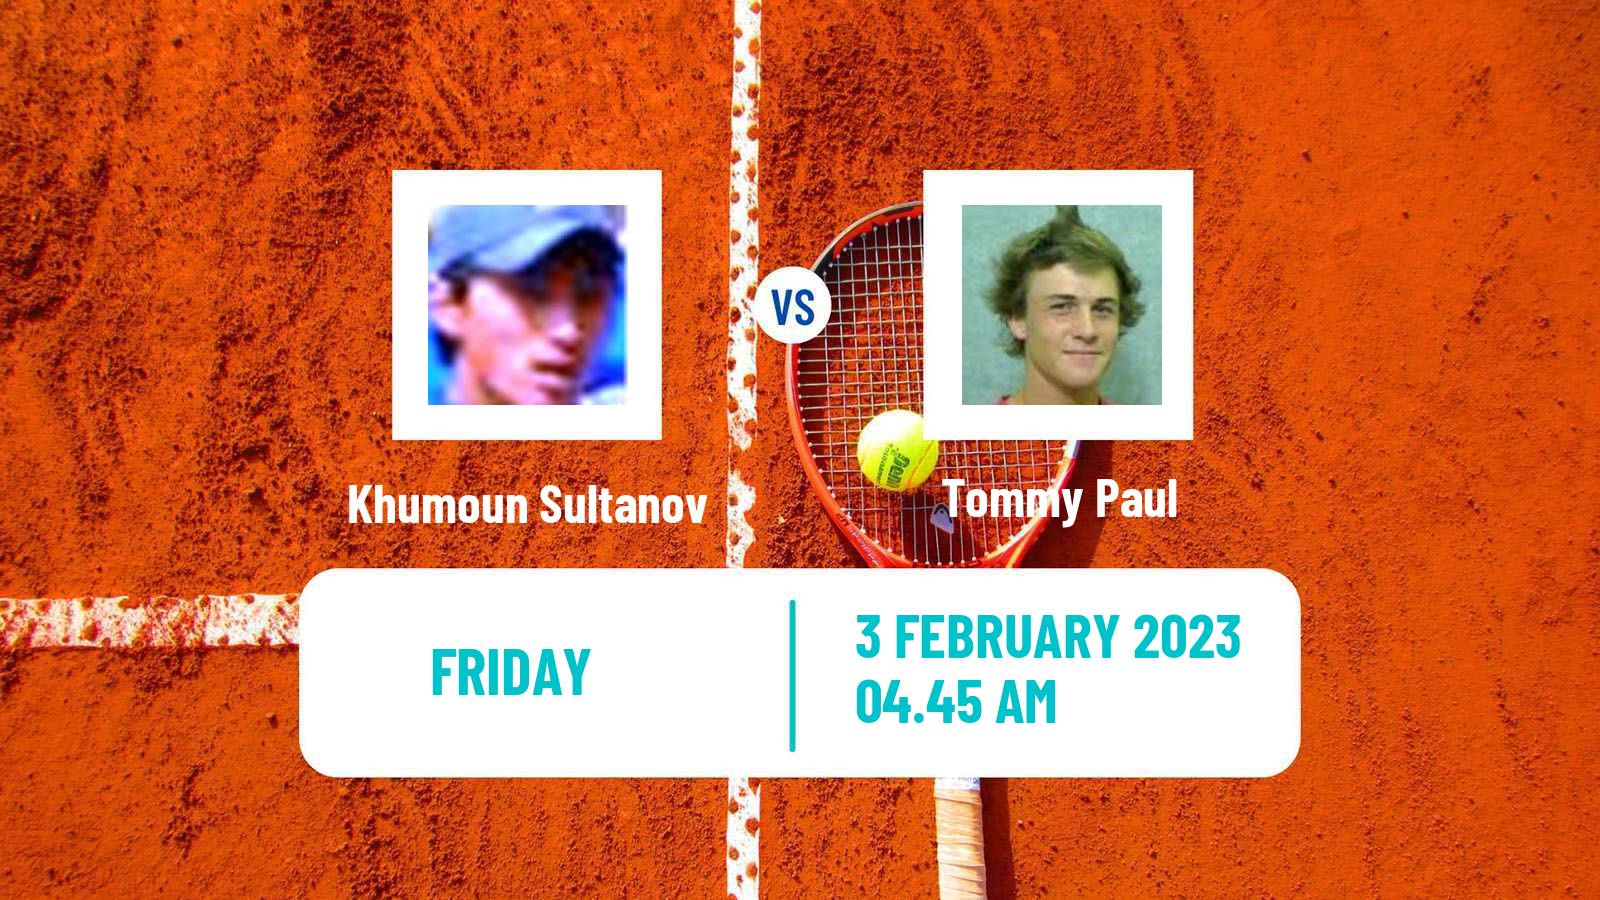 Tennis Davis Cup World Group Khumoun Sultanov - Tommy Paul